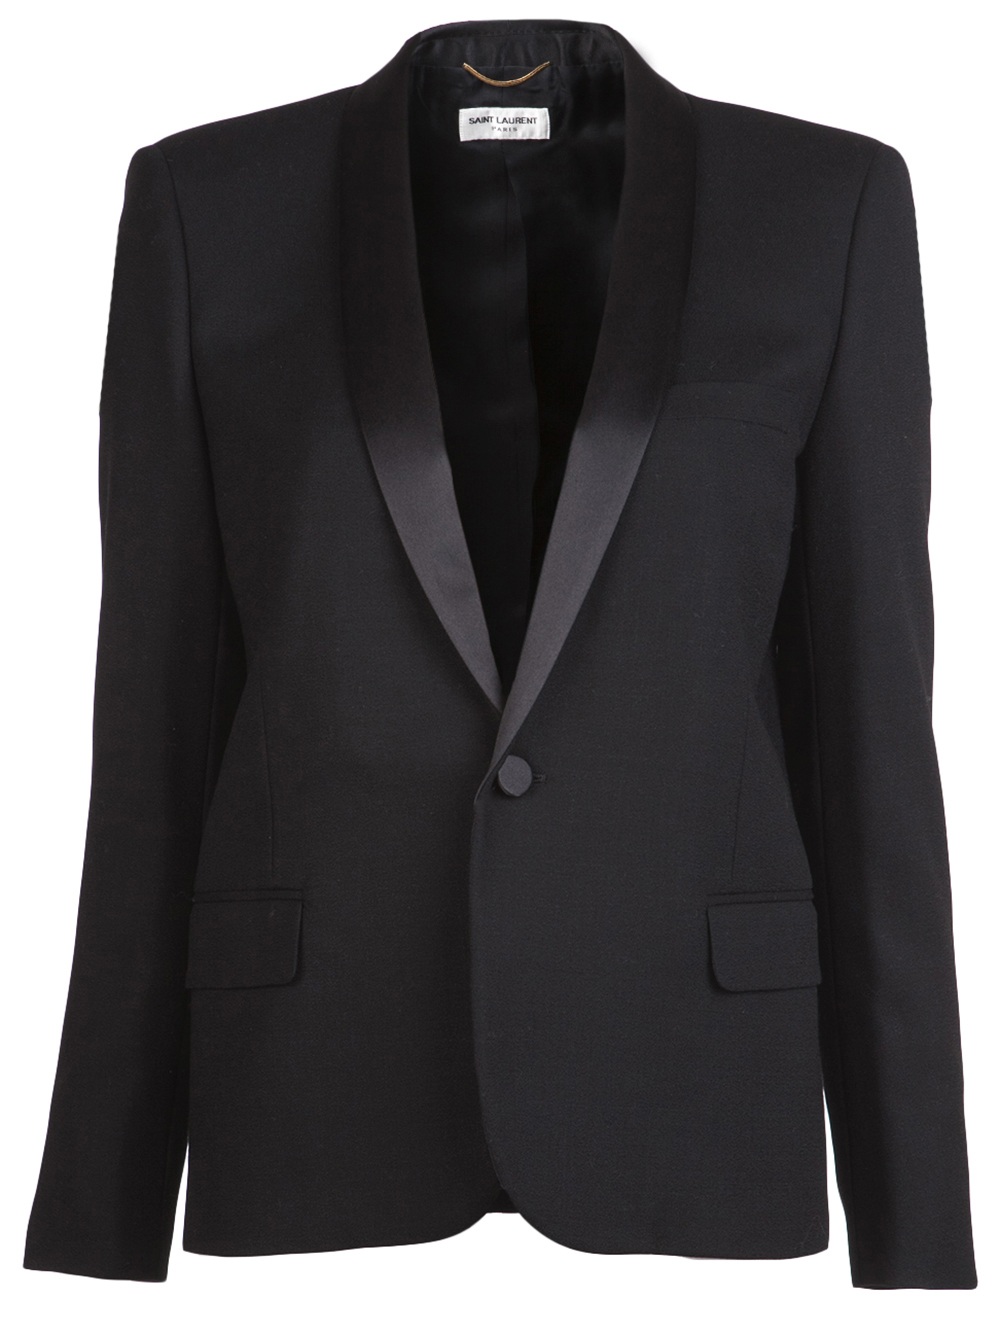 Lyst - Saint Laurent Satin Collar Blazer in Black